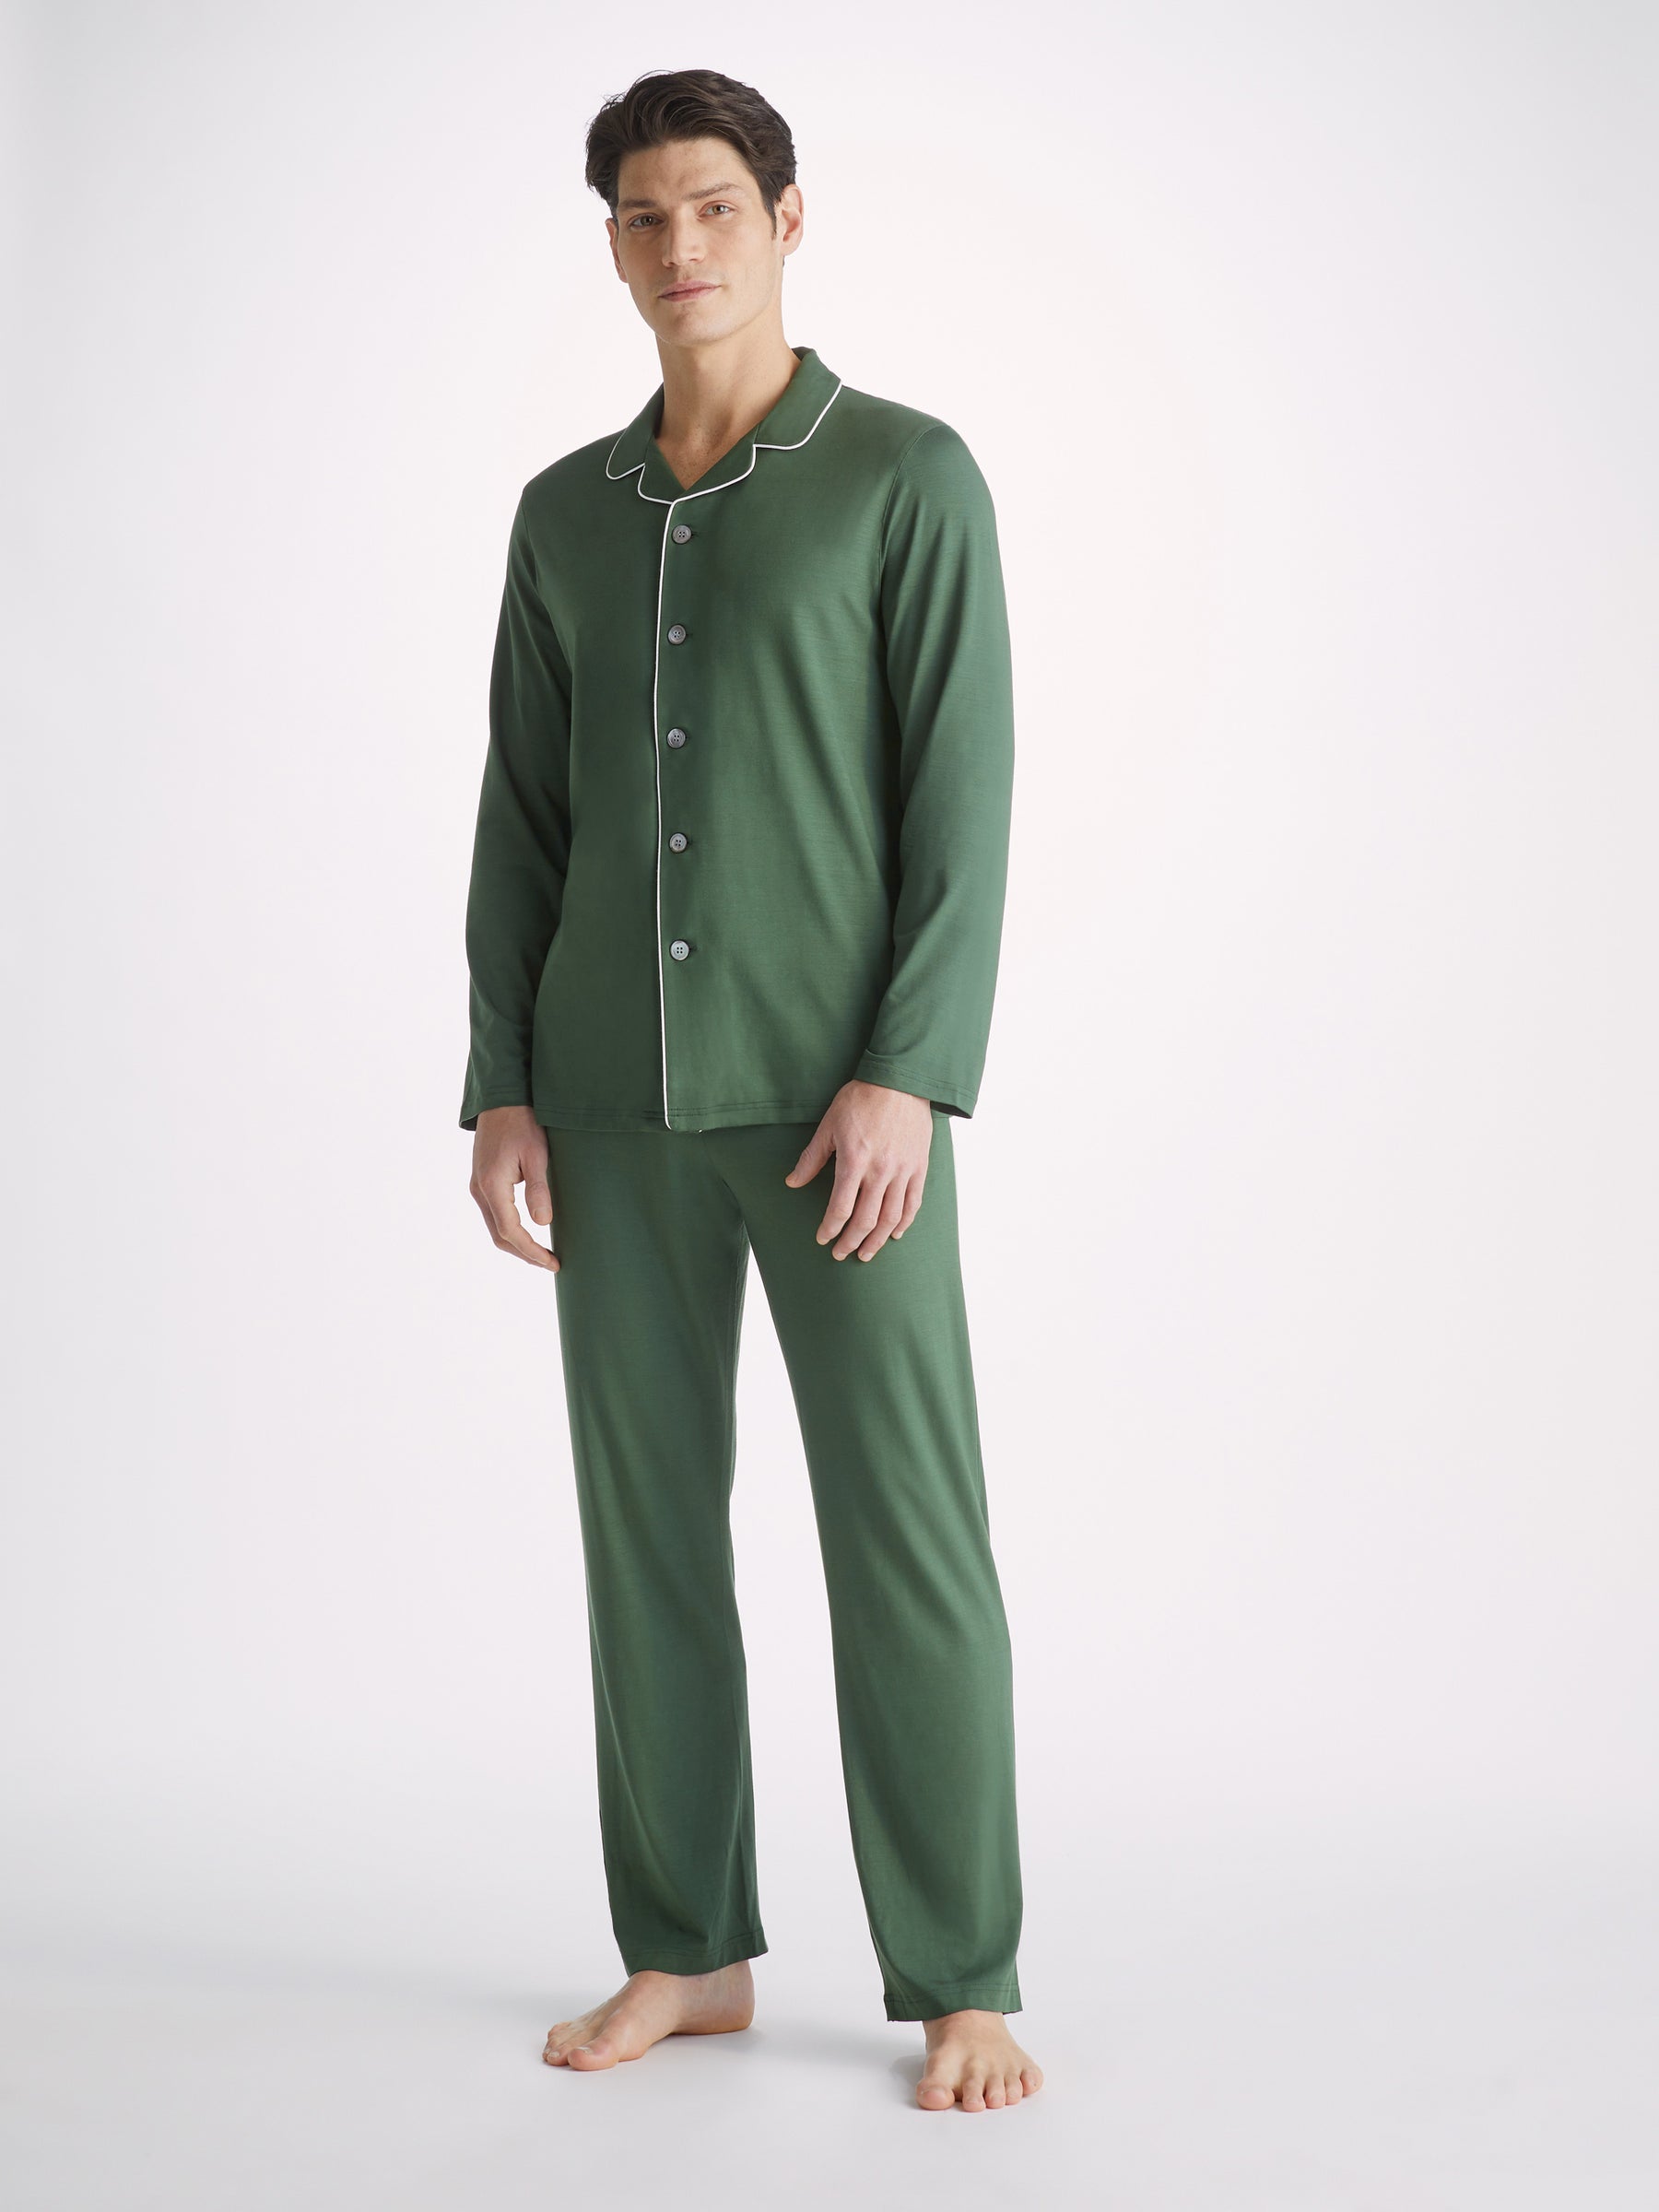 Men's Pyjamas Basel Micro Modal Stretch Hunter Green